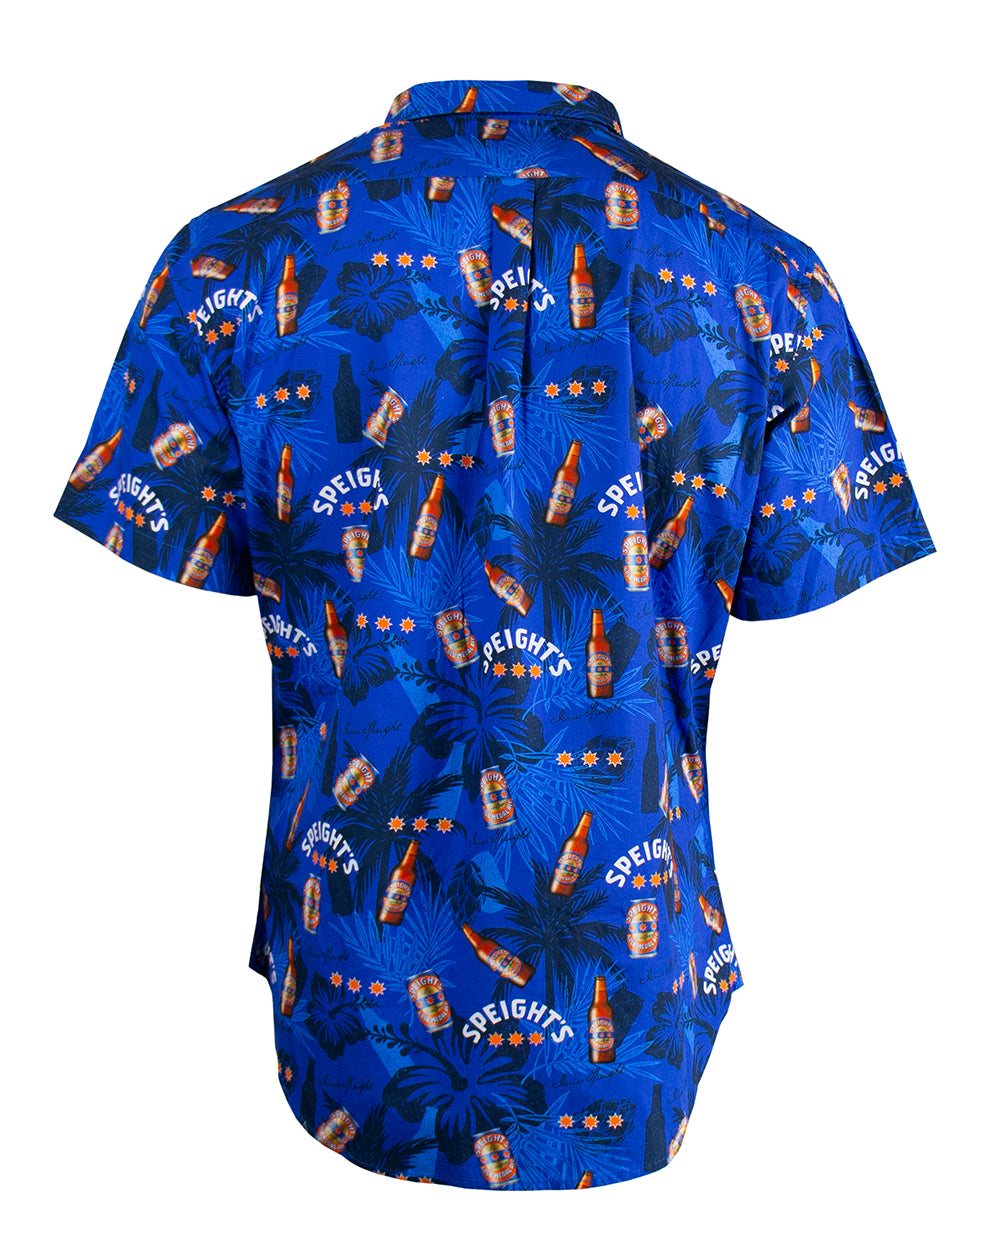 Speight's Hawaiian Shirt -  Beer Gear Apparel & Merchandise - Speights - Lion Red - VB - Tokyo Dy merch